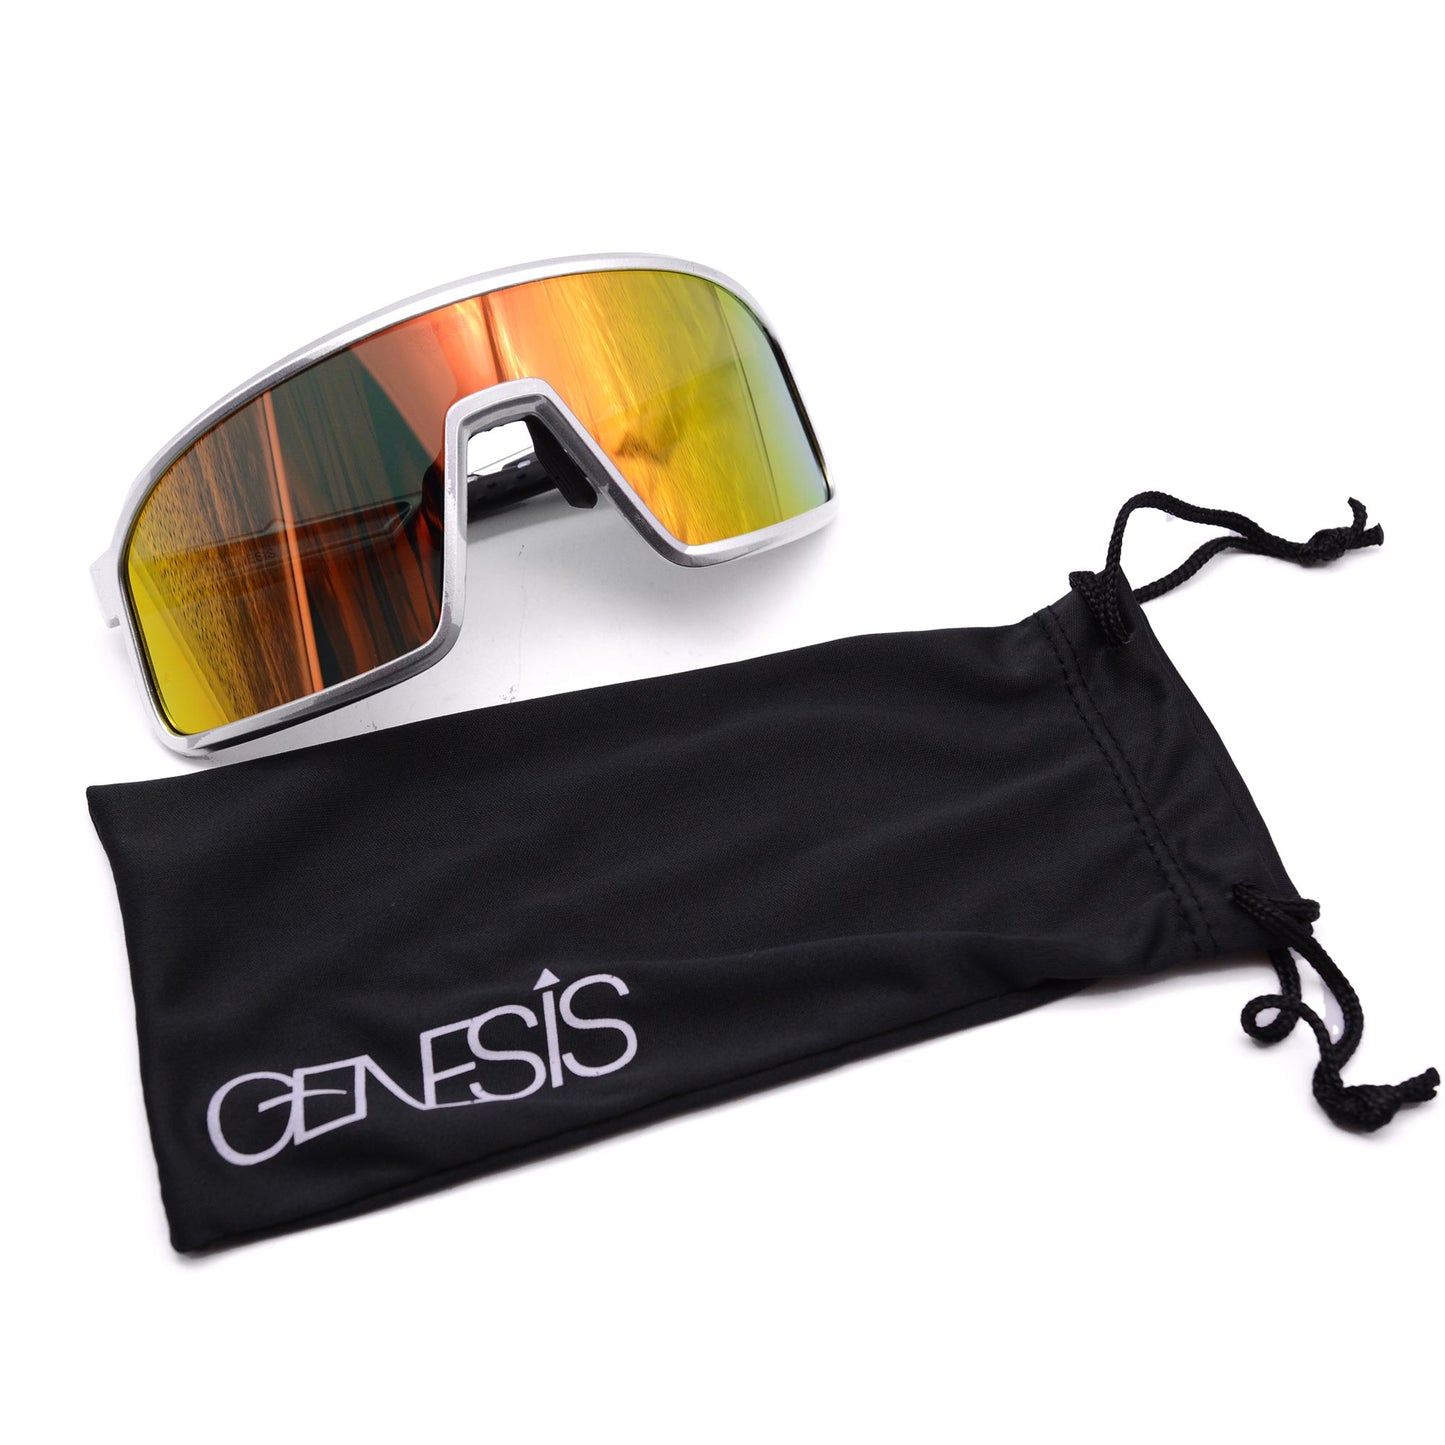 Genesis Raceface Photochromic Bike Sunglass - Matte Silver